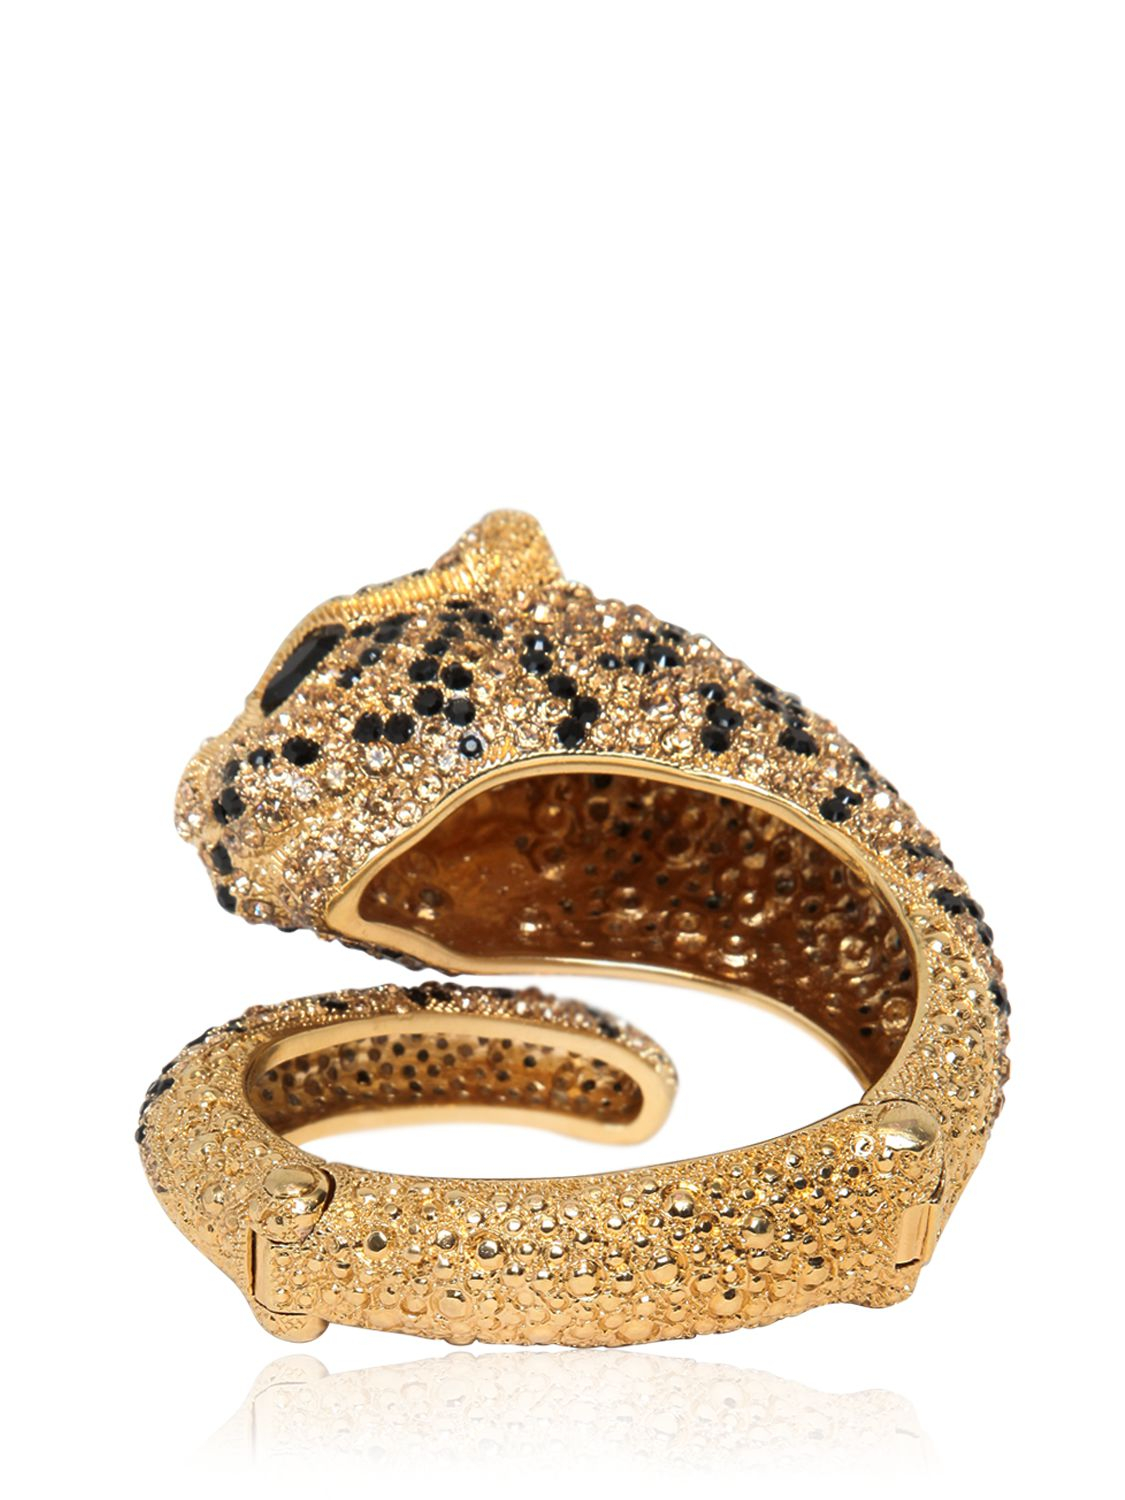 Roberto Cavalli Jeweled Panther Cuff Bracelet in Gold/Black (Metallic) |  Lyst